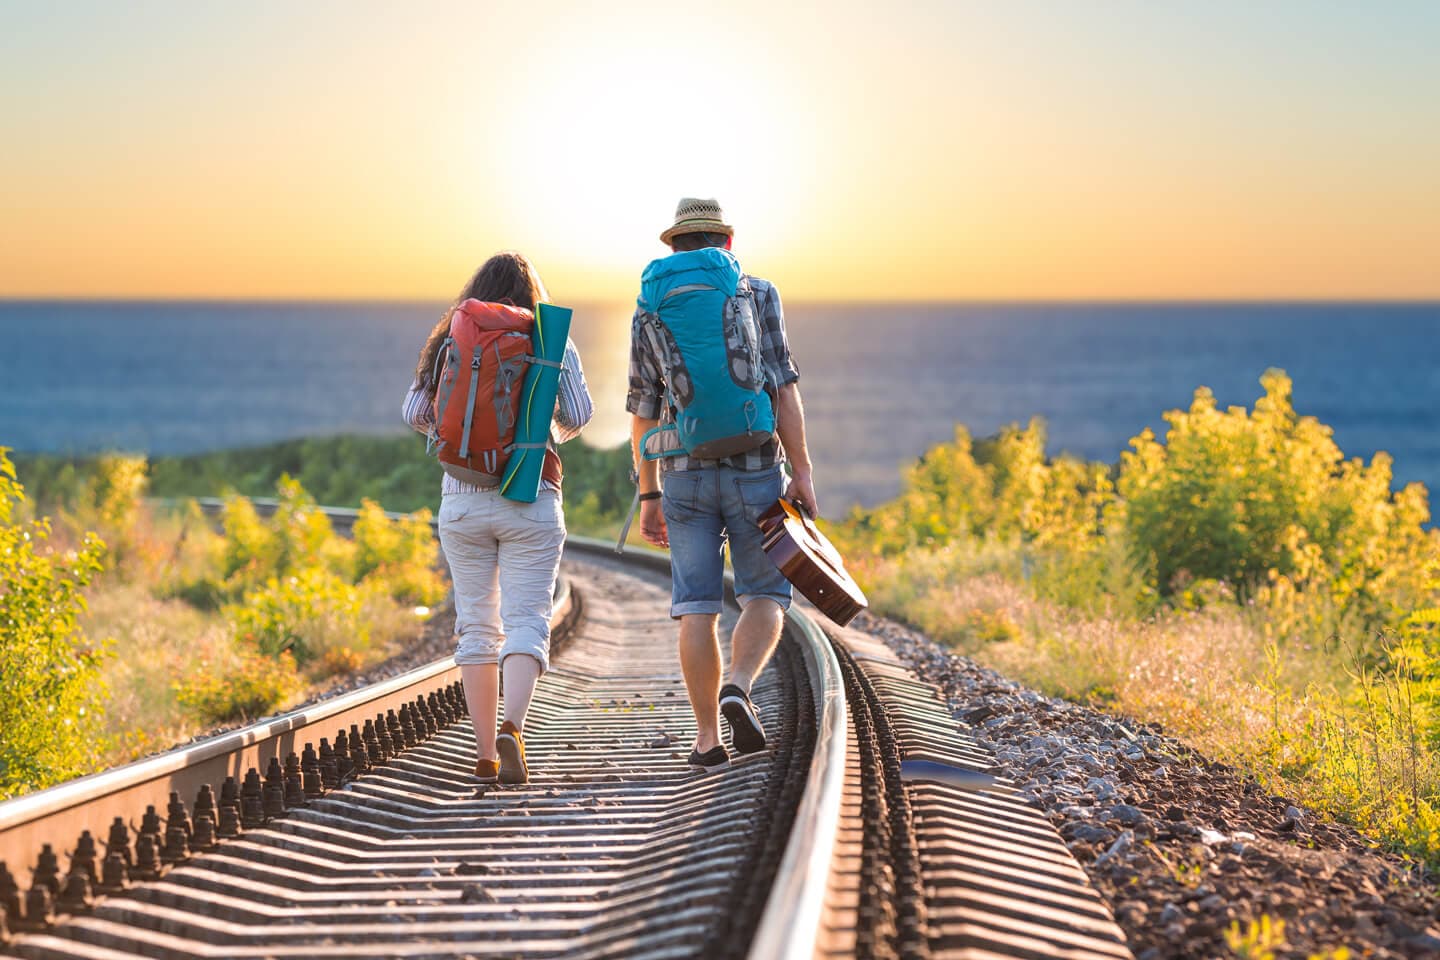 Traveling bersama pasangan. (Shutterstock)